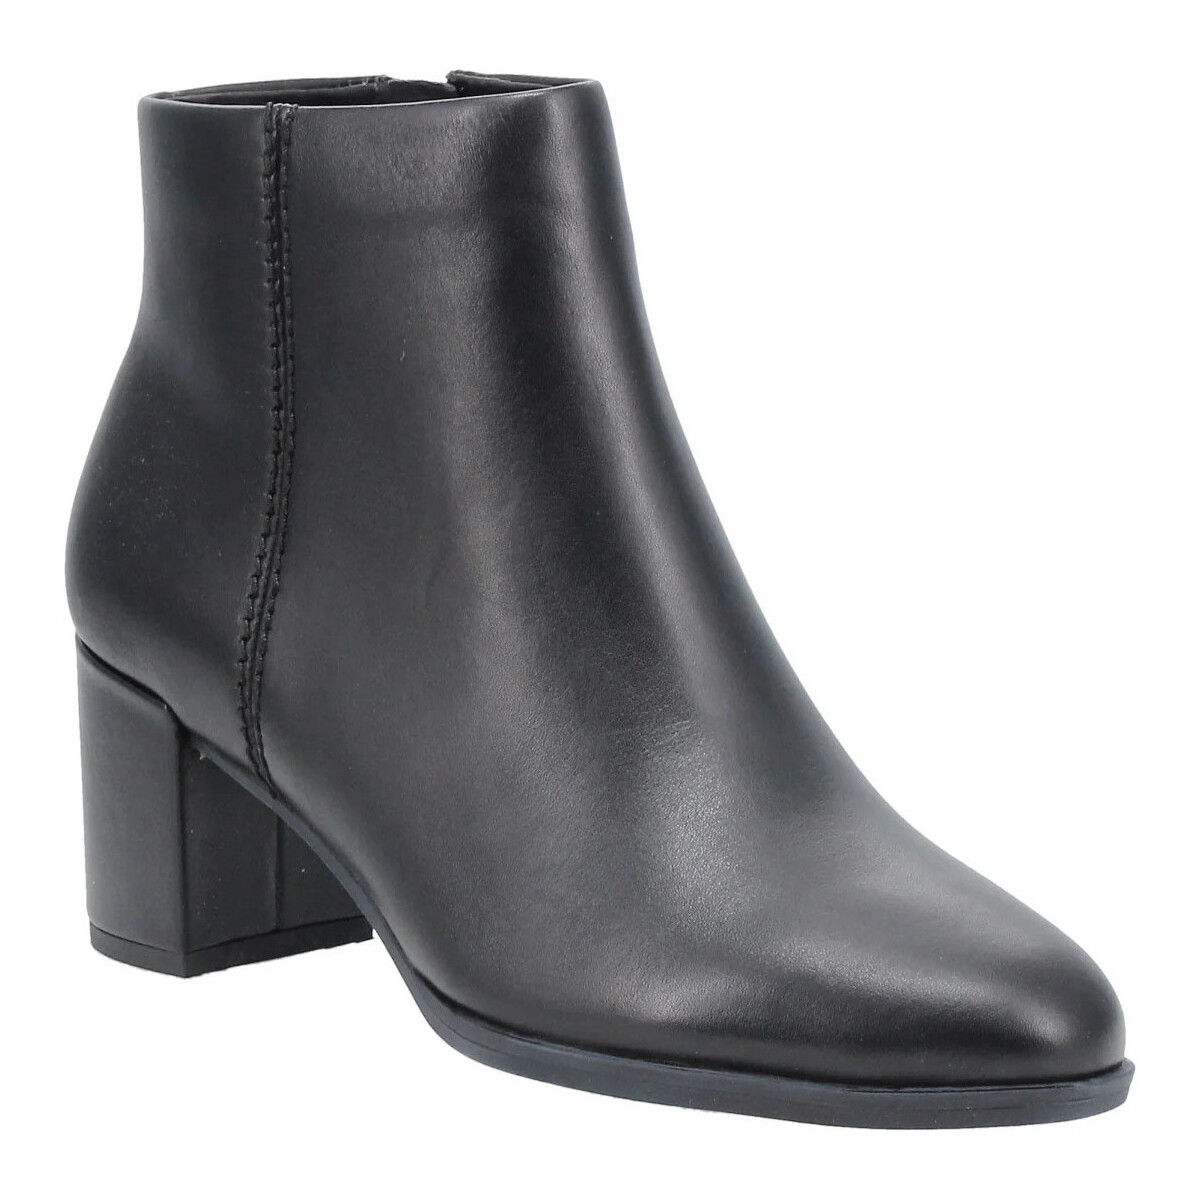 Chaussures Femme Boots Clarks FREVA55 ZIP BLACK Noir